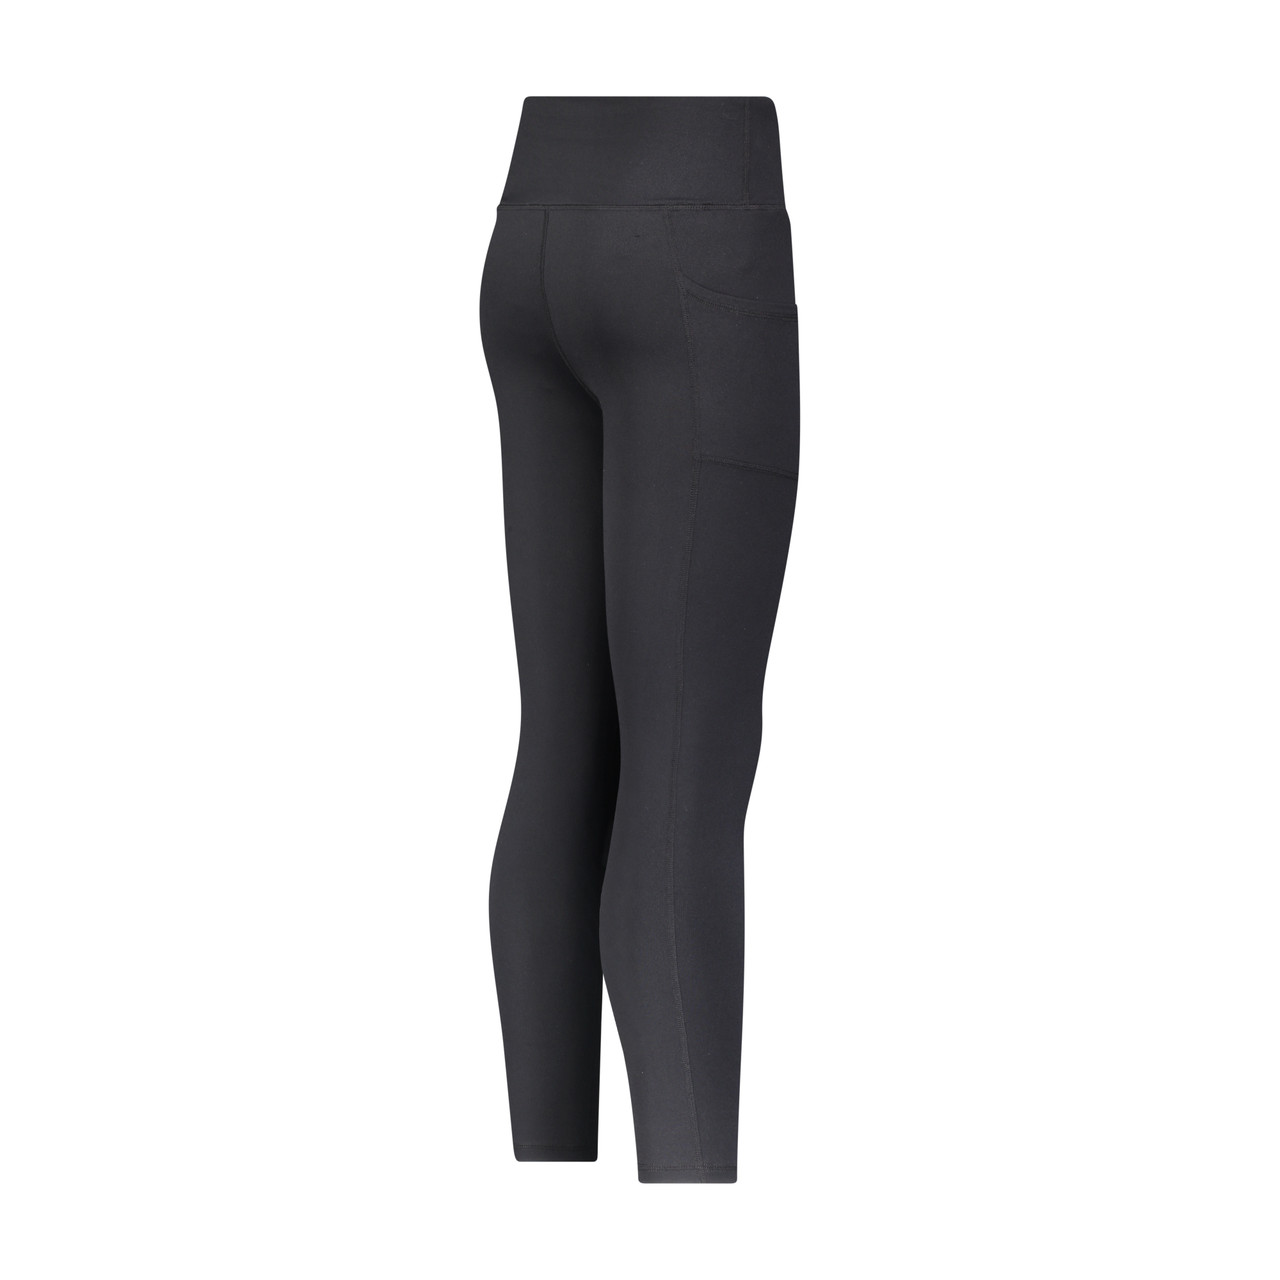 Lumana Leakproof Yoga Pant Leggings, 22 Inseam, Gray, 3X, Single